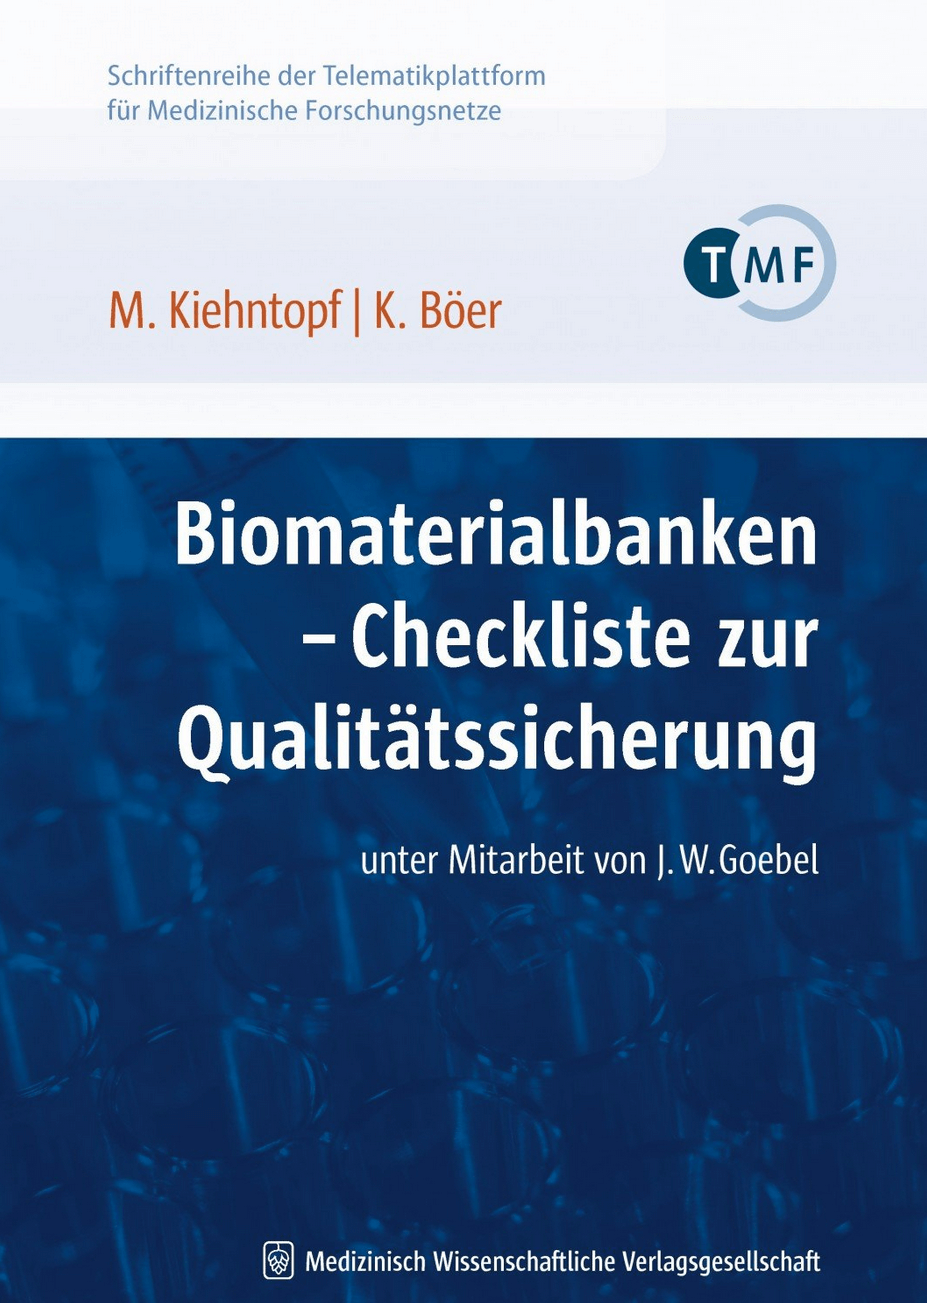 Cover TMF-Schriftenreihe Biomaterialbanken